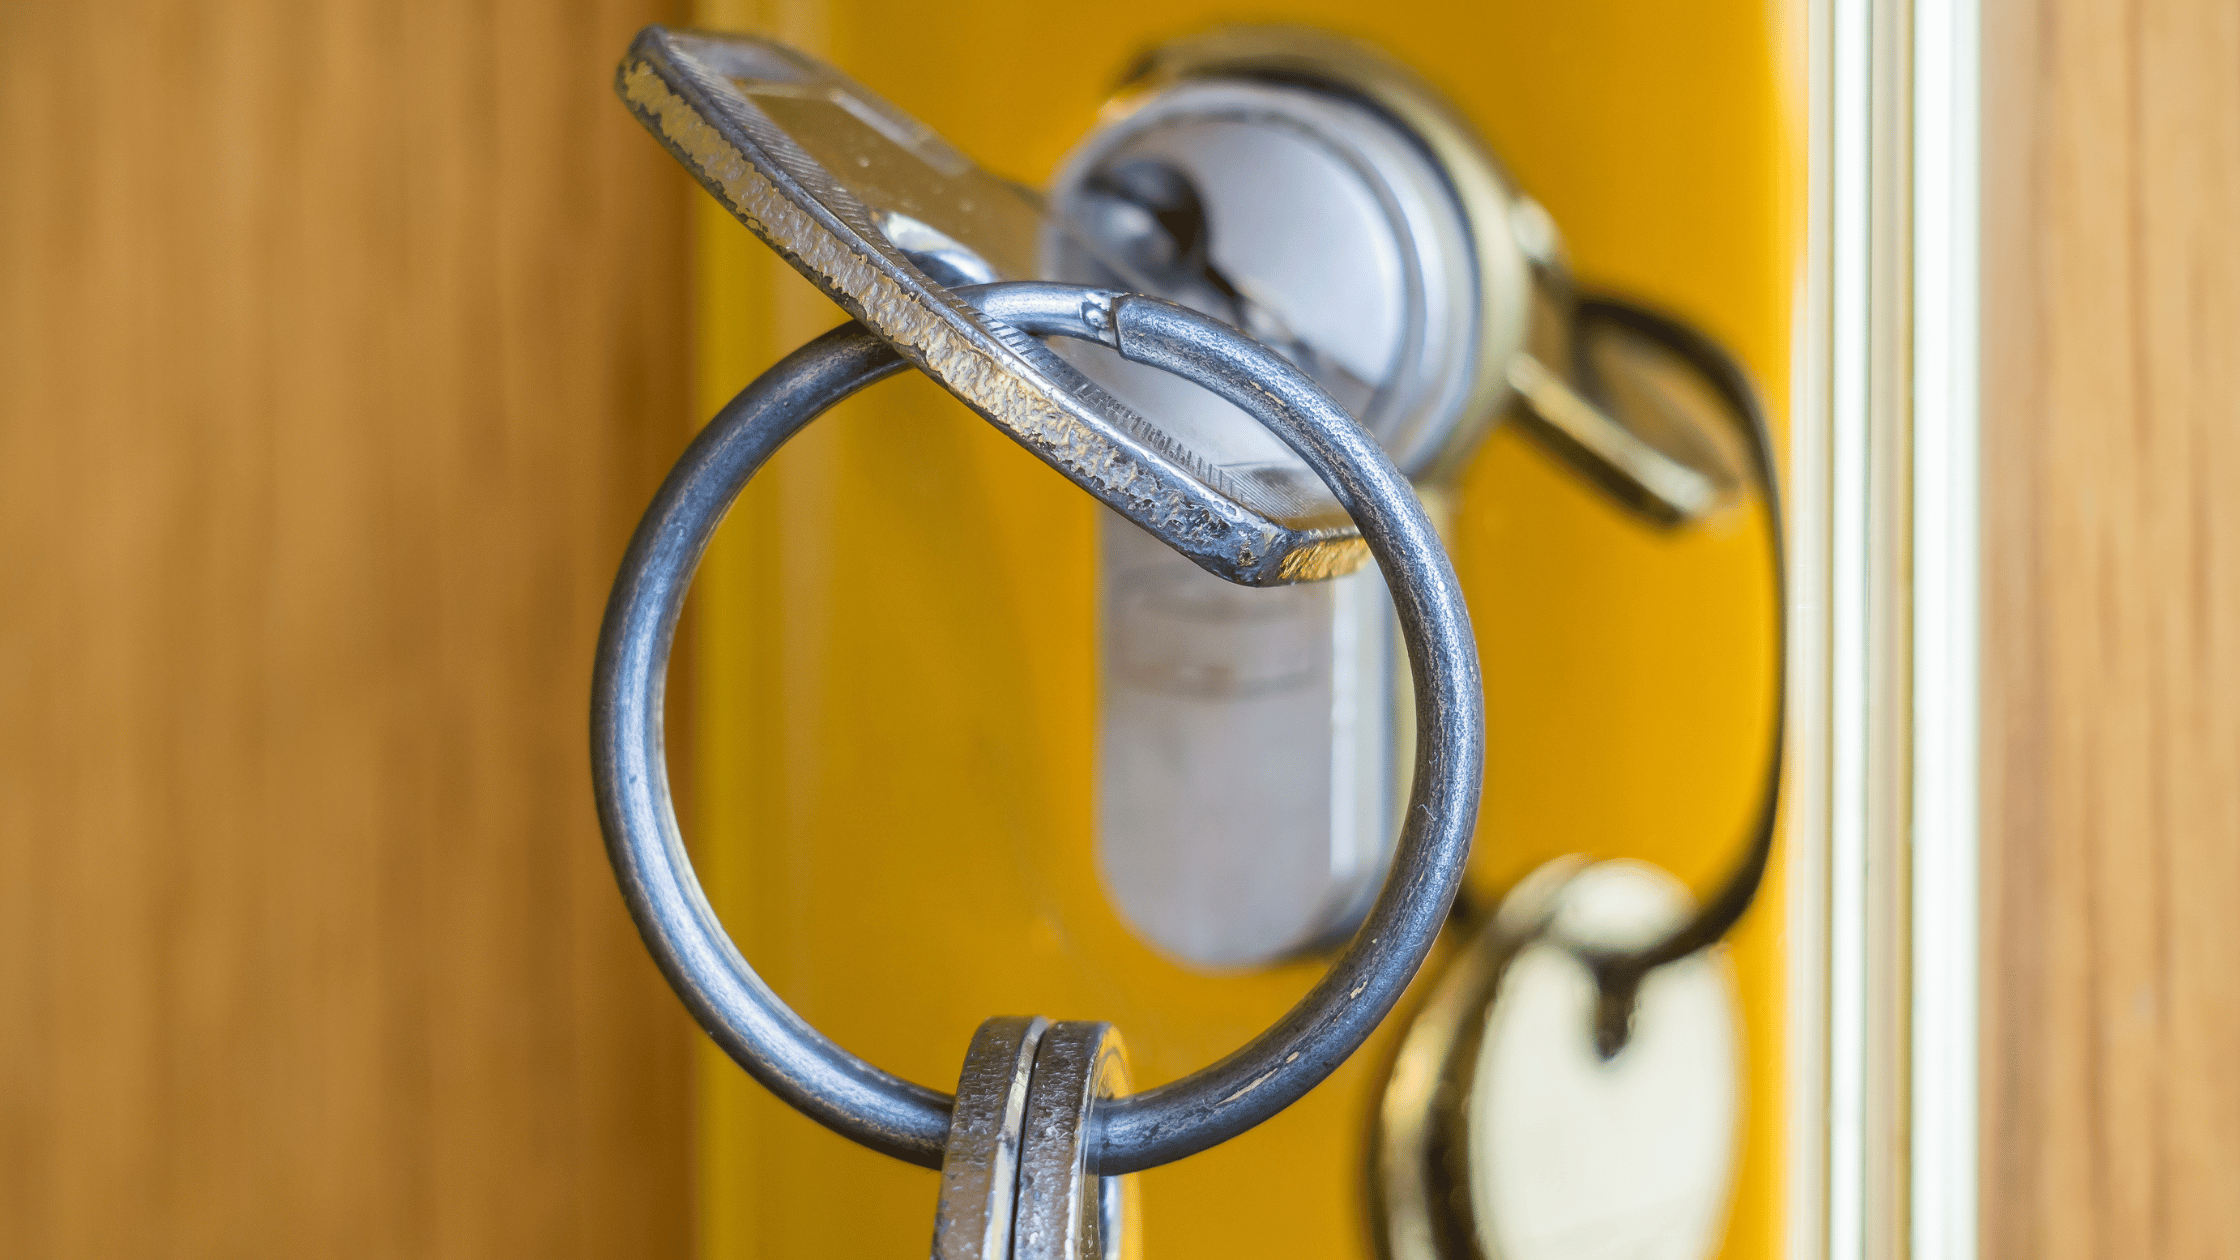 keys in a door knob